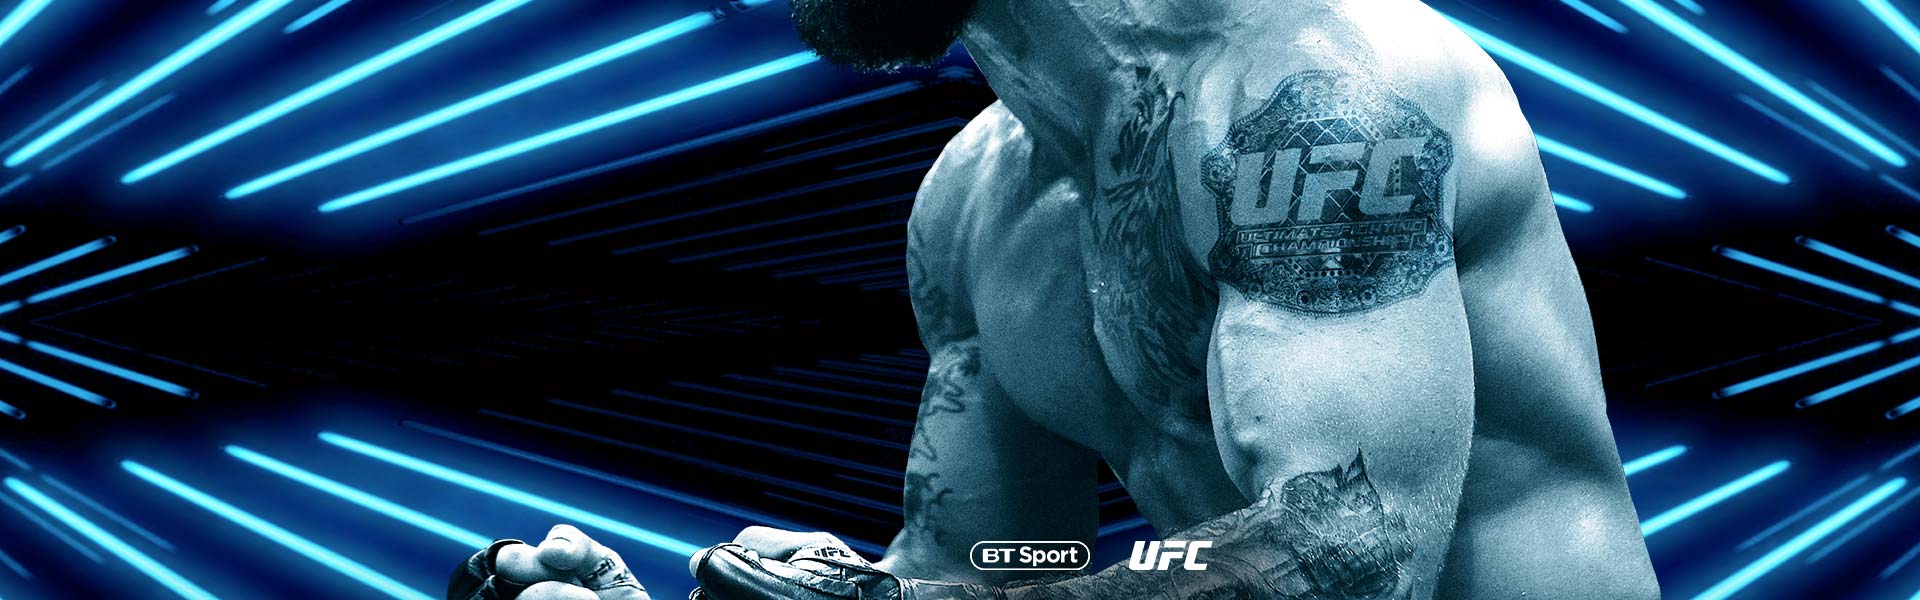 Watch UFC live on BT Sport